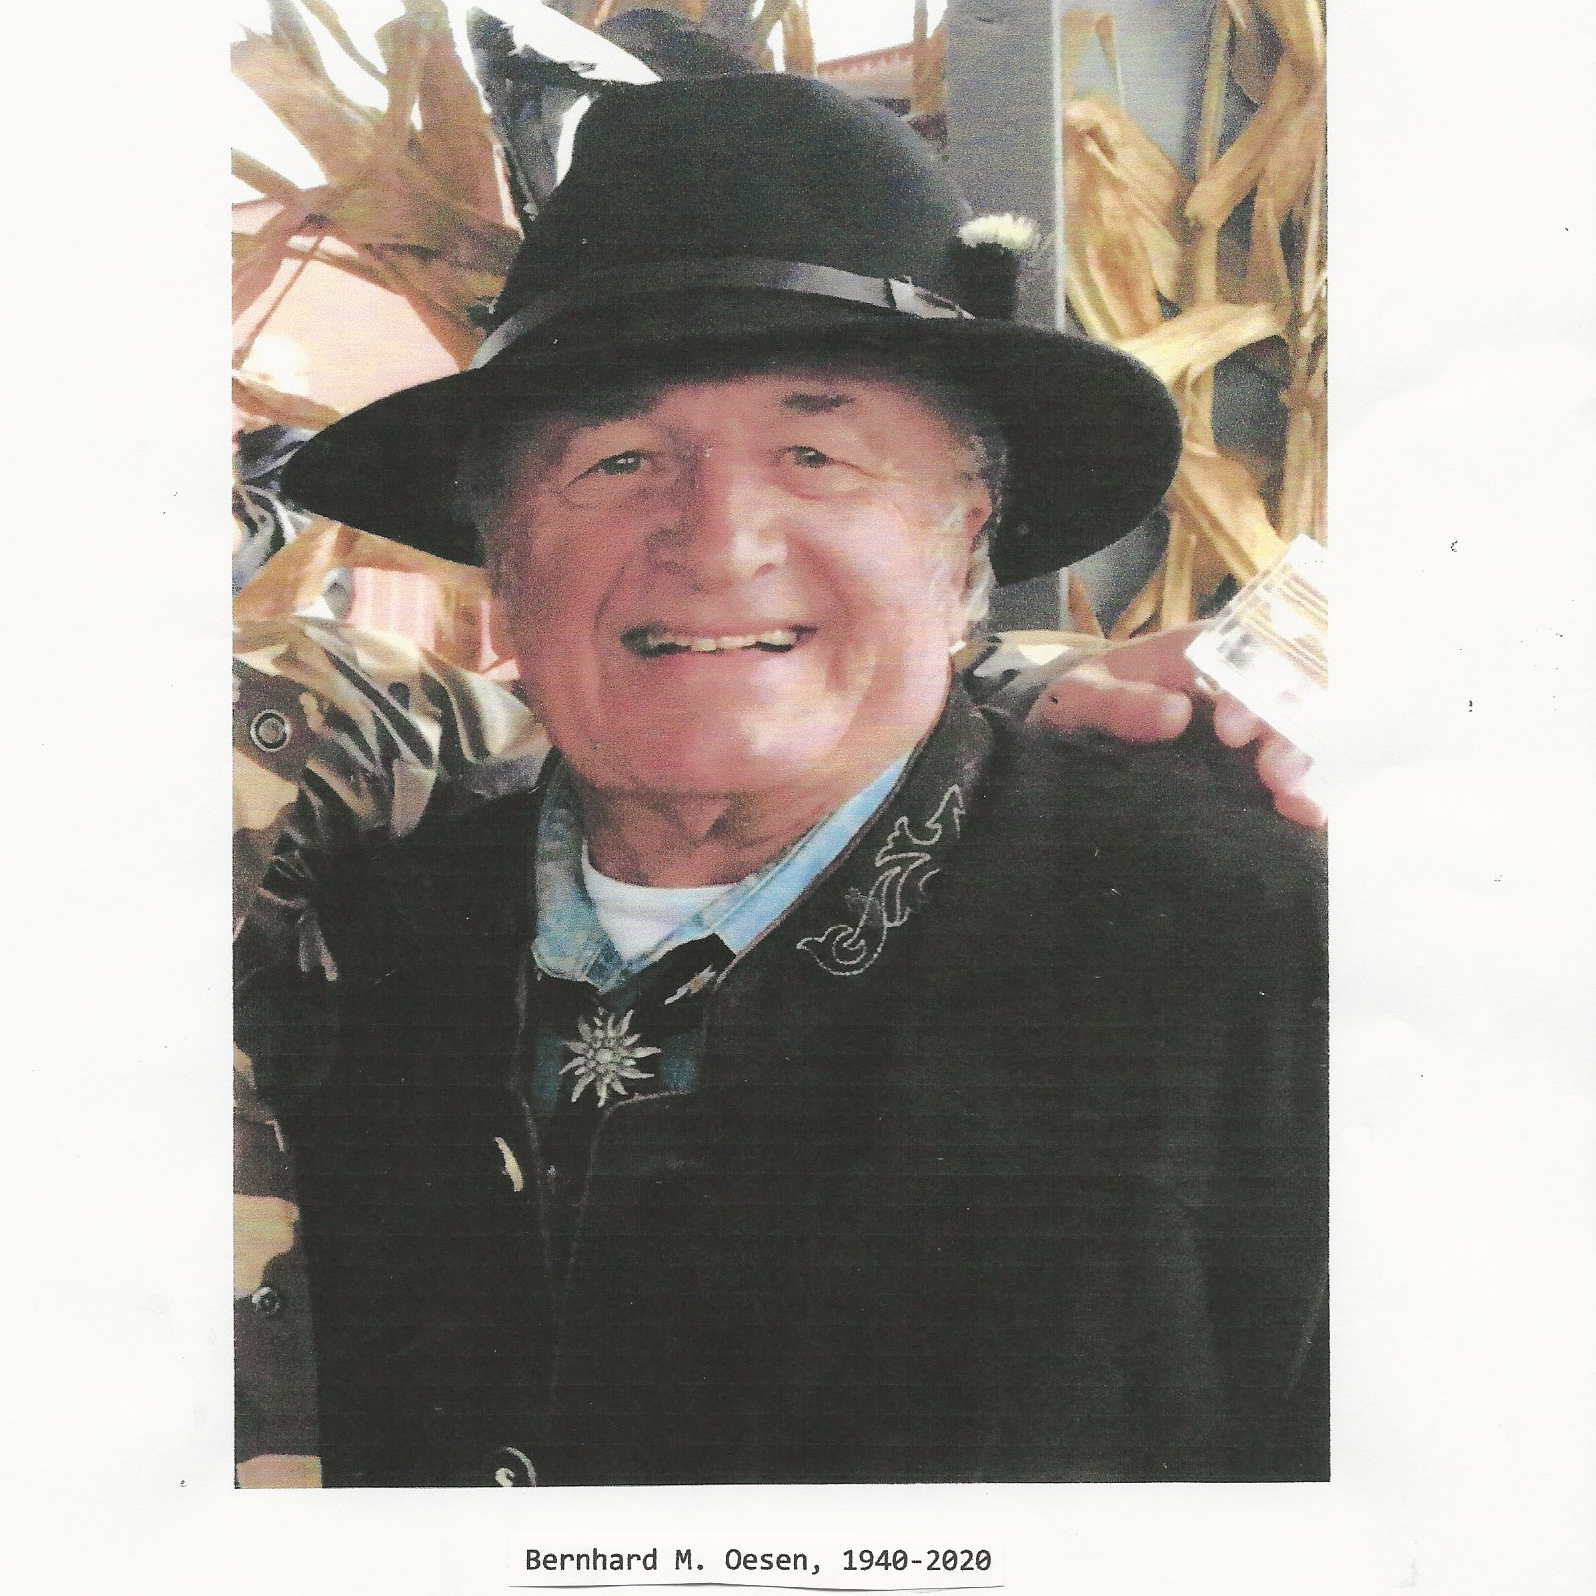 Photo of Bernhard Oesen in a black hat